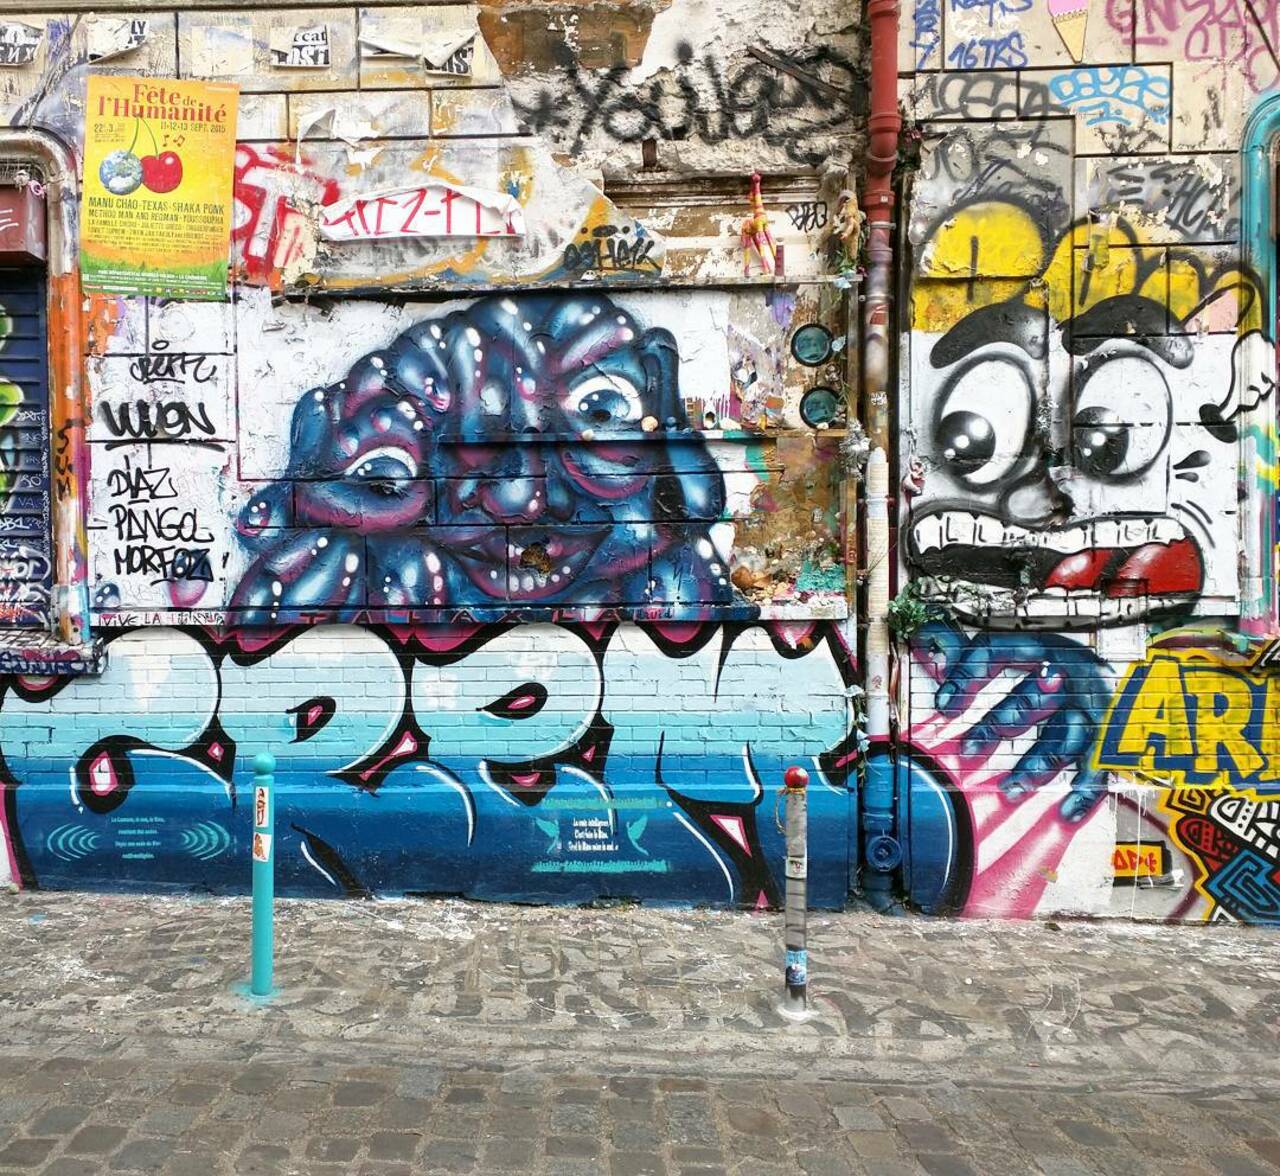 #Paris #graffiti photo by @alphaquadra http://ift.tt/1ViM2D3 #StreetArt http://t.co/N9iWgJXHQP